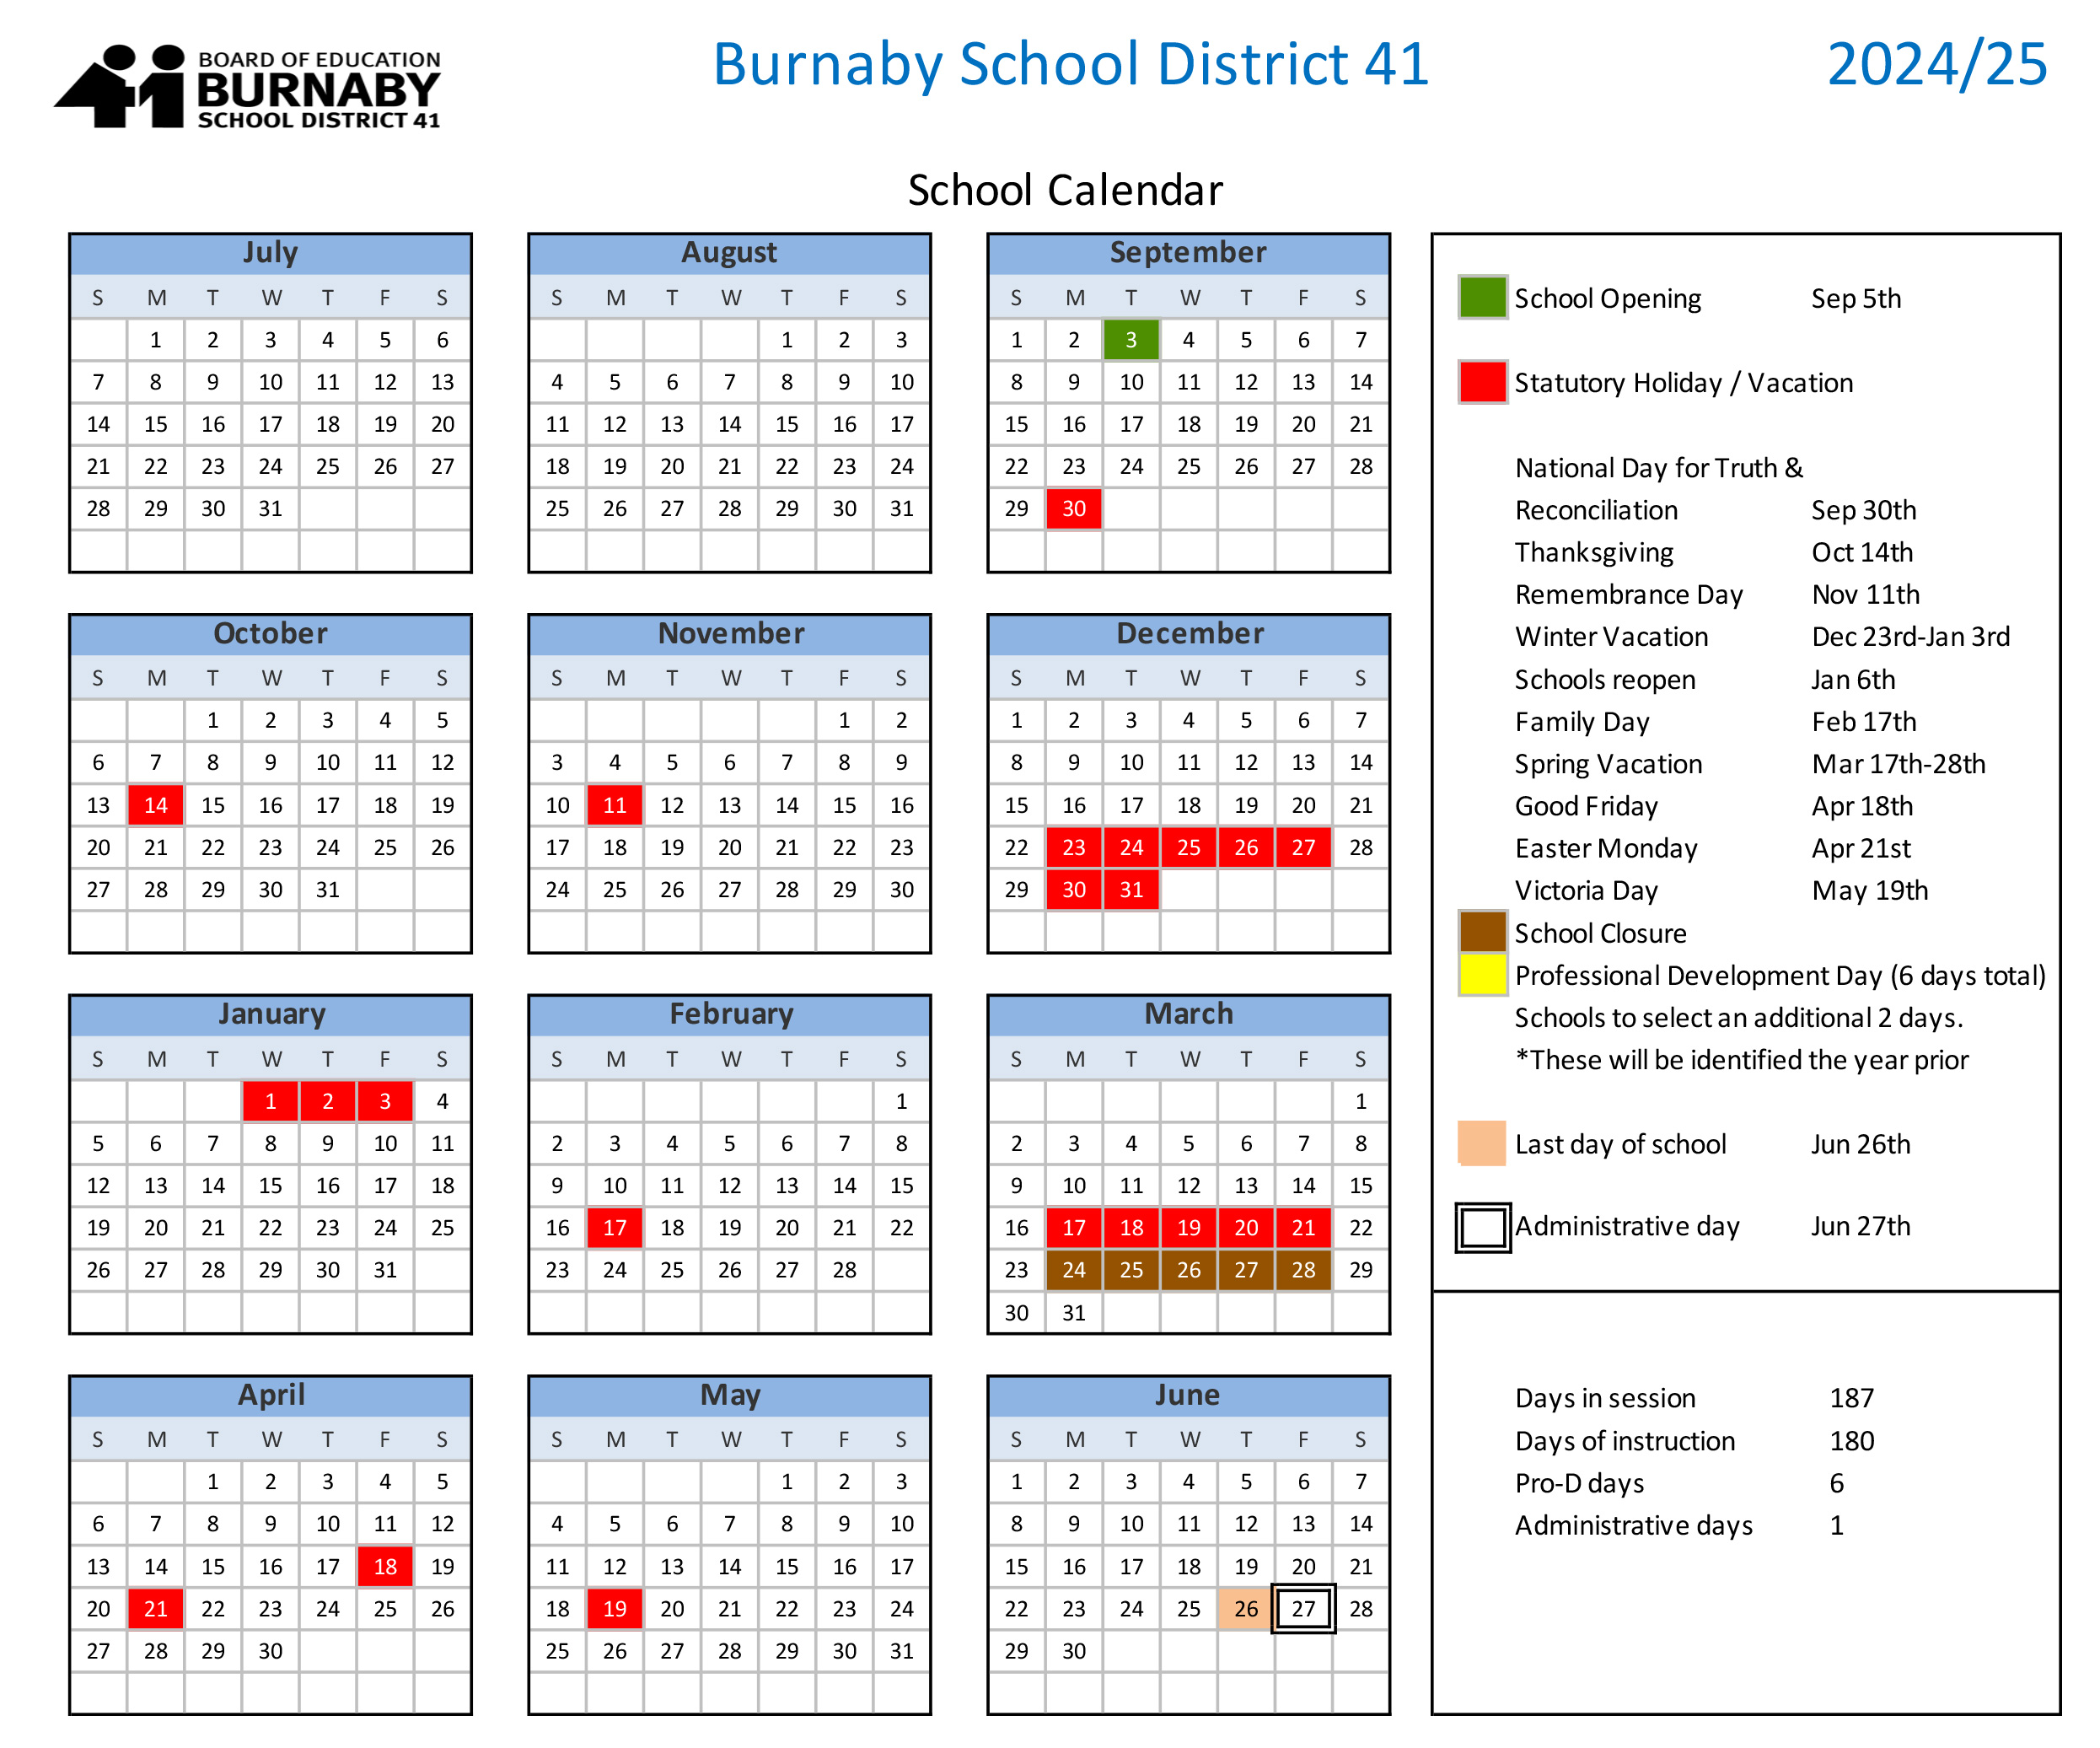 SchoolCalendar2425 Burnaby Schools